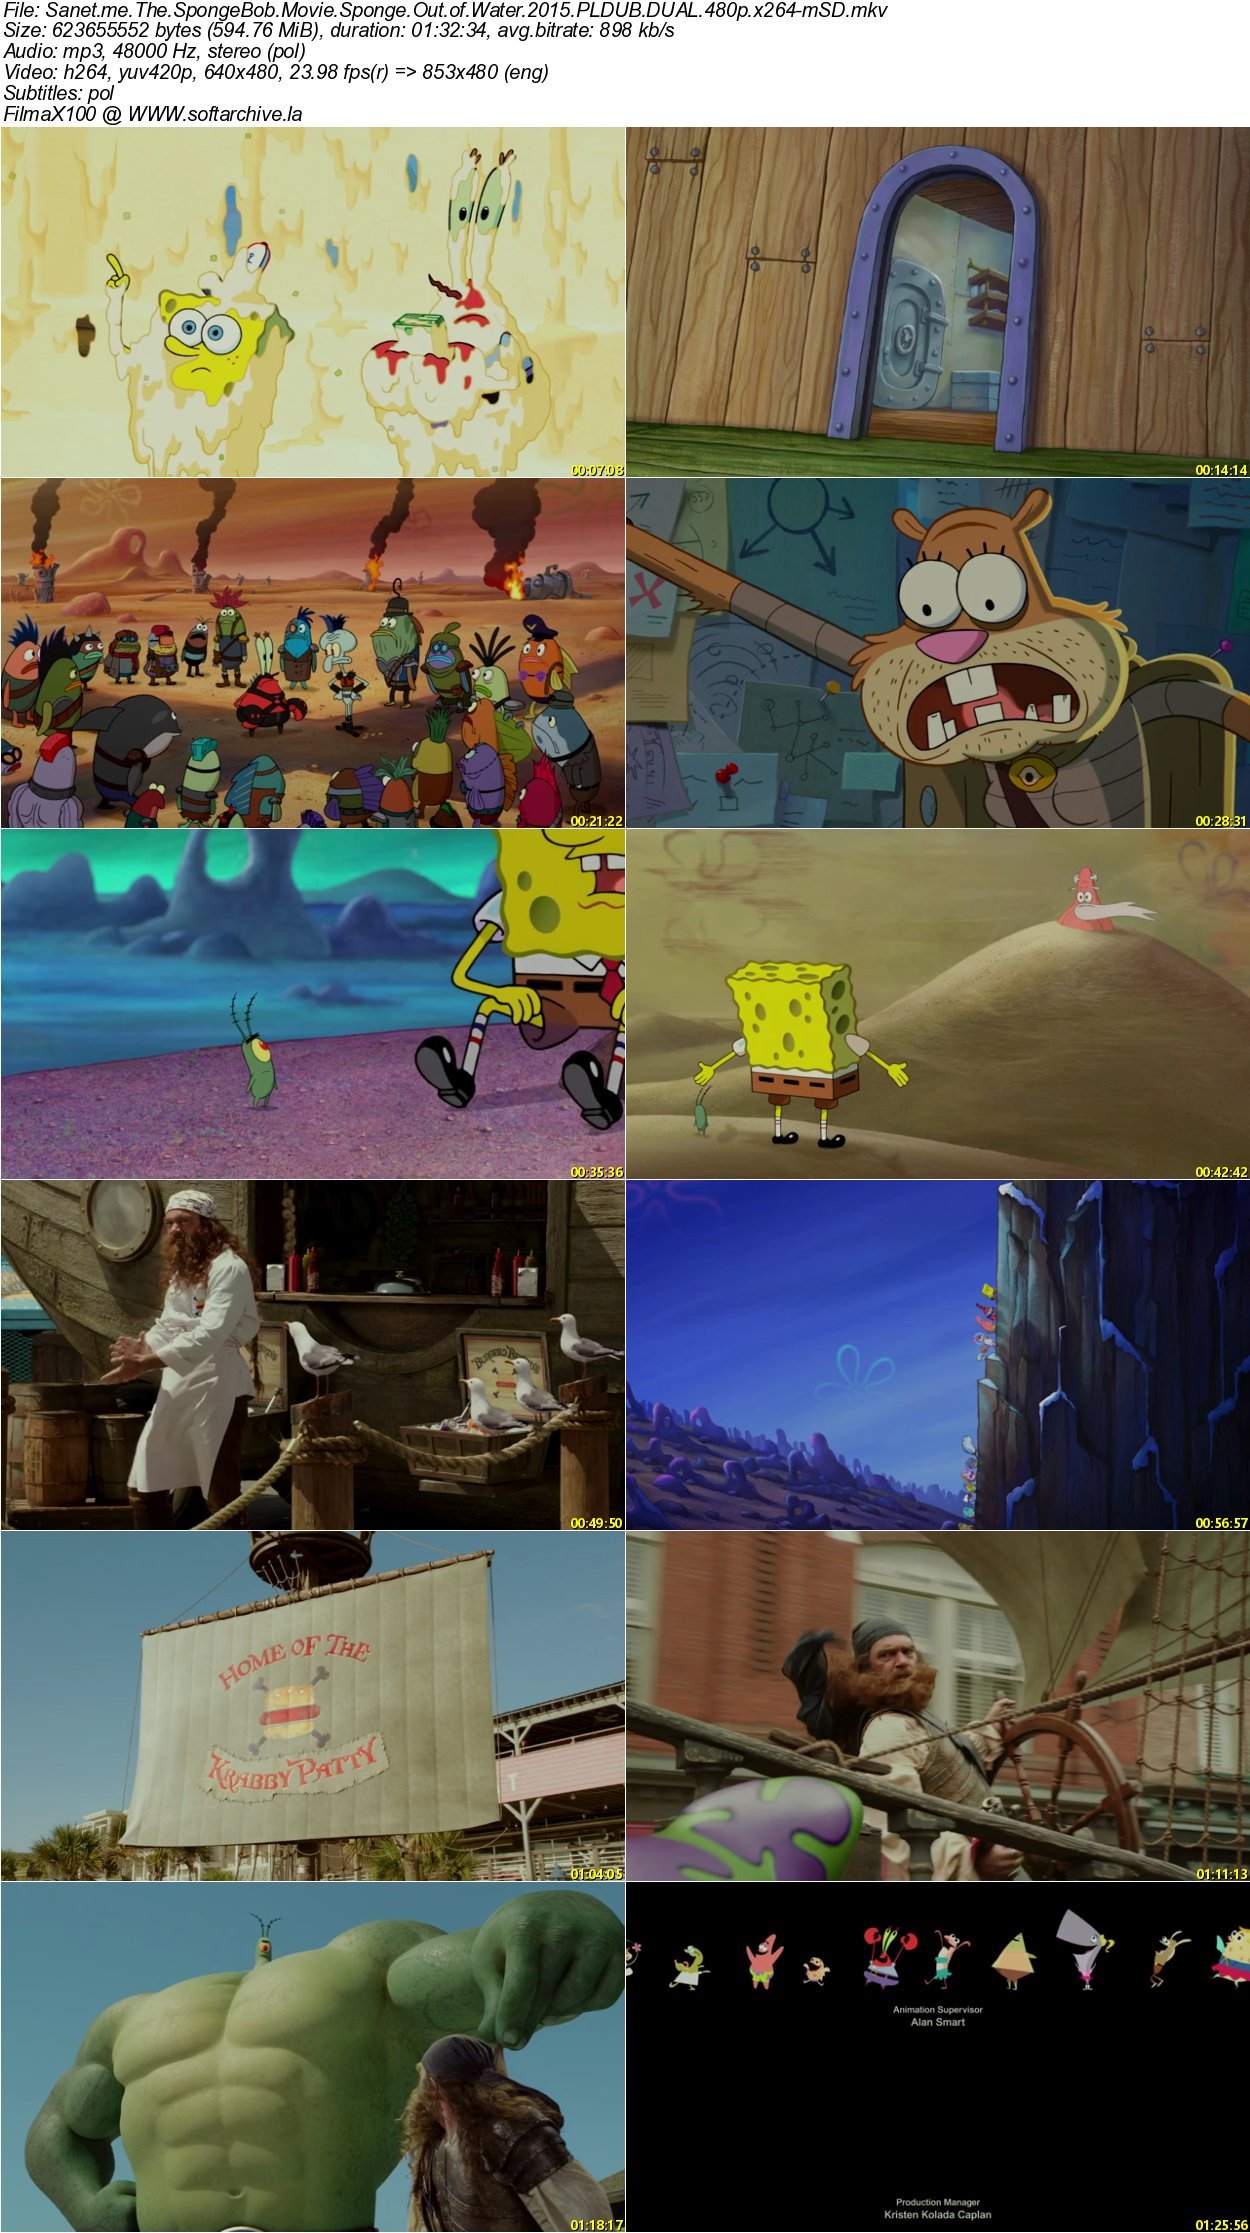 The SpongeBob Movie Sponge Out of Water 2015 PLDUB DUAL 480p x264-mSD.